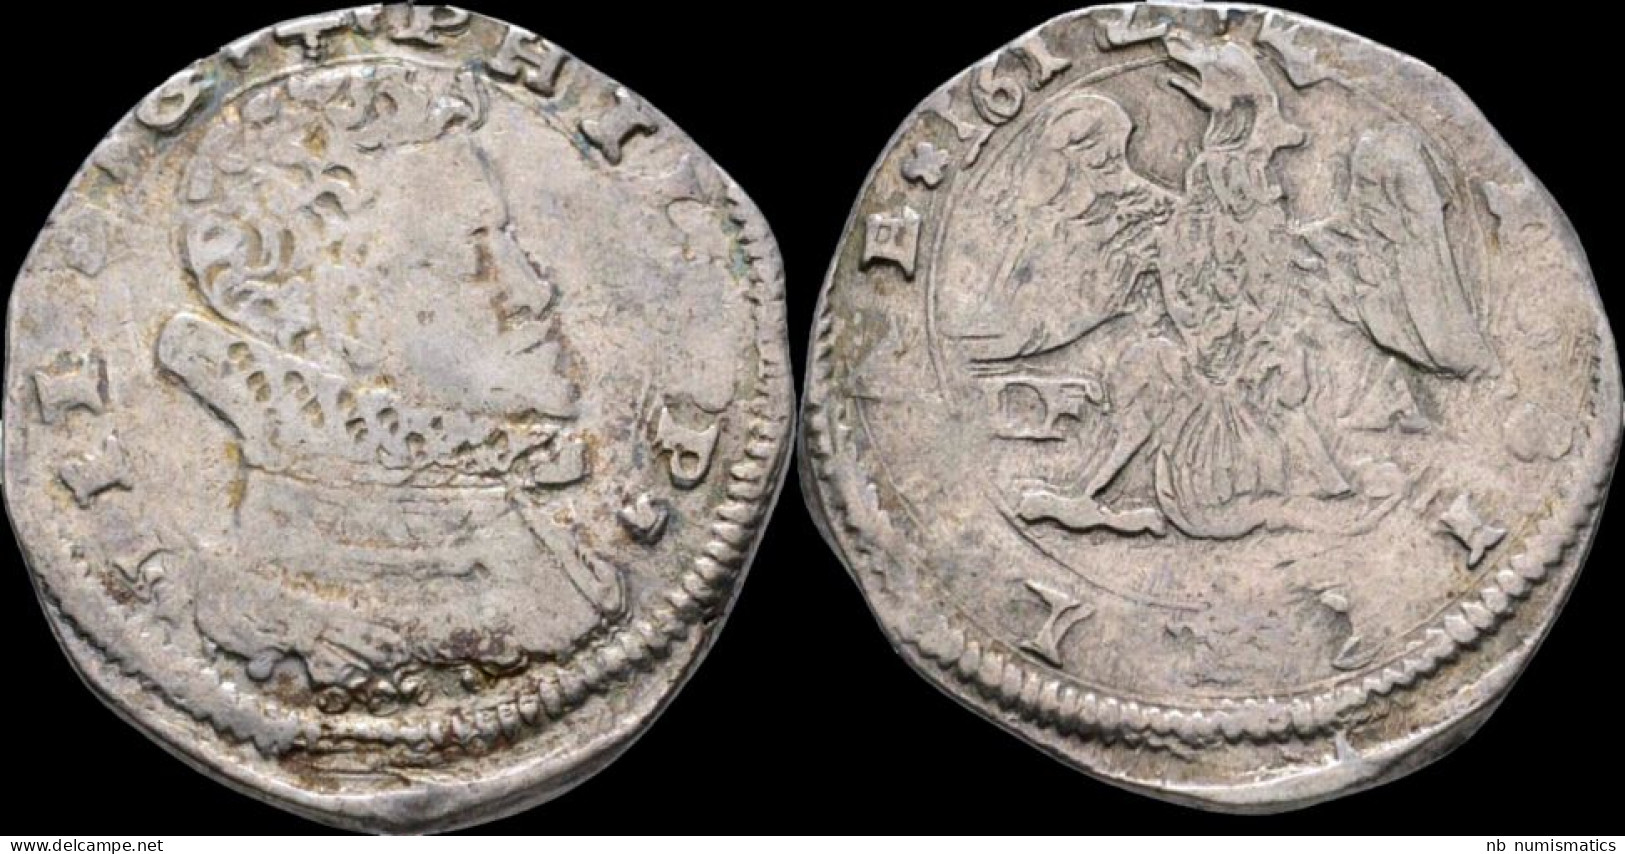 Italy Sicily Messina Philip III Of Spain AR 4 Tari 1612 - Two Sicilia